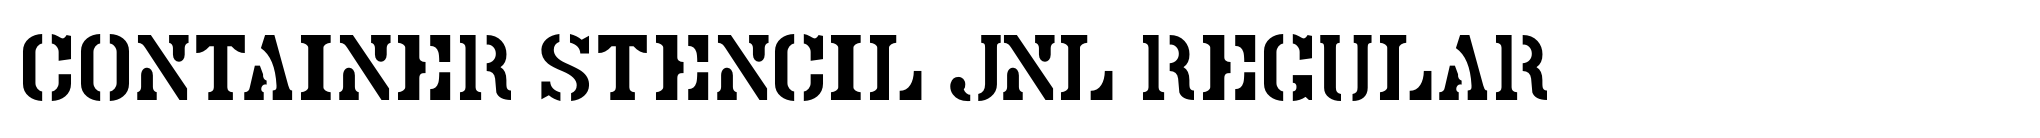 Container Stencil JNL Regular image